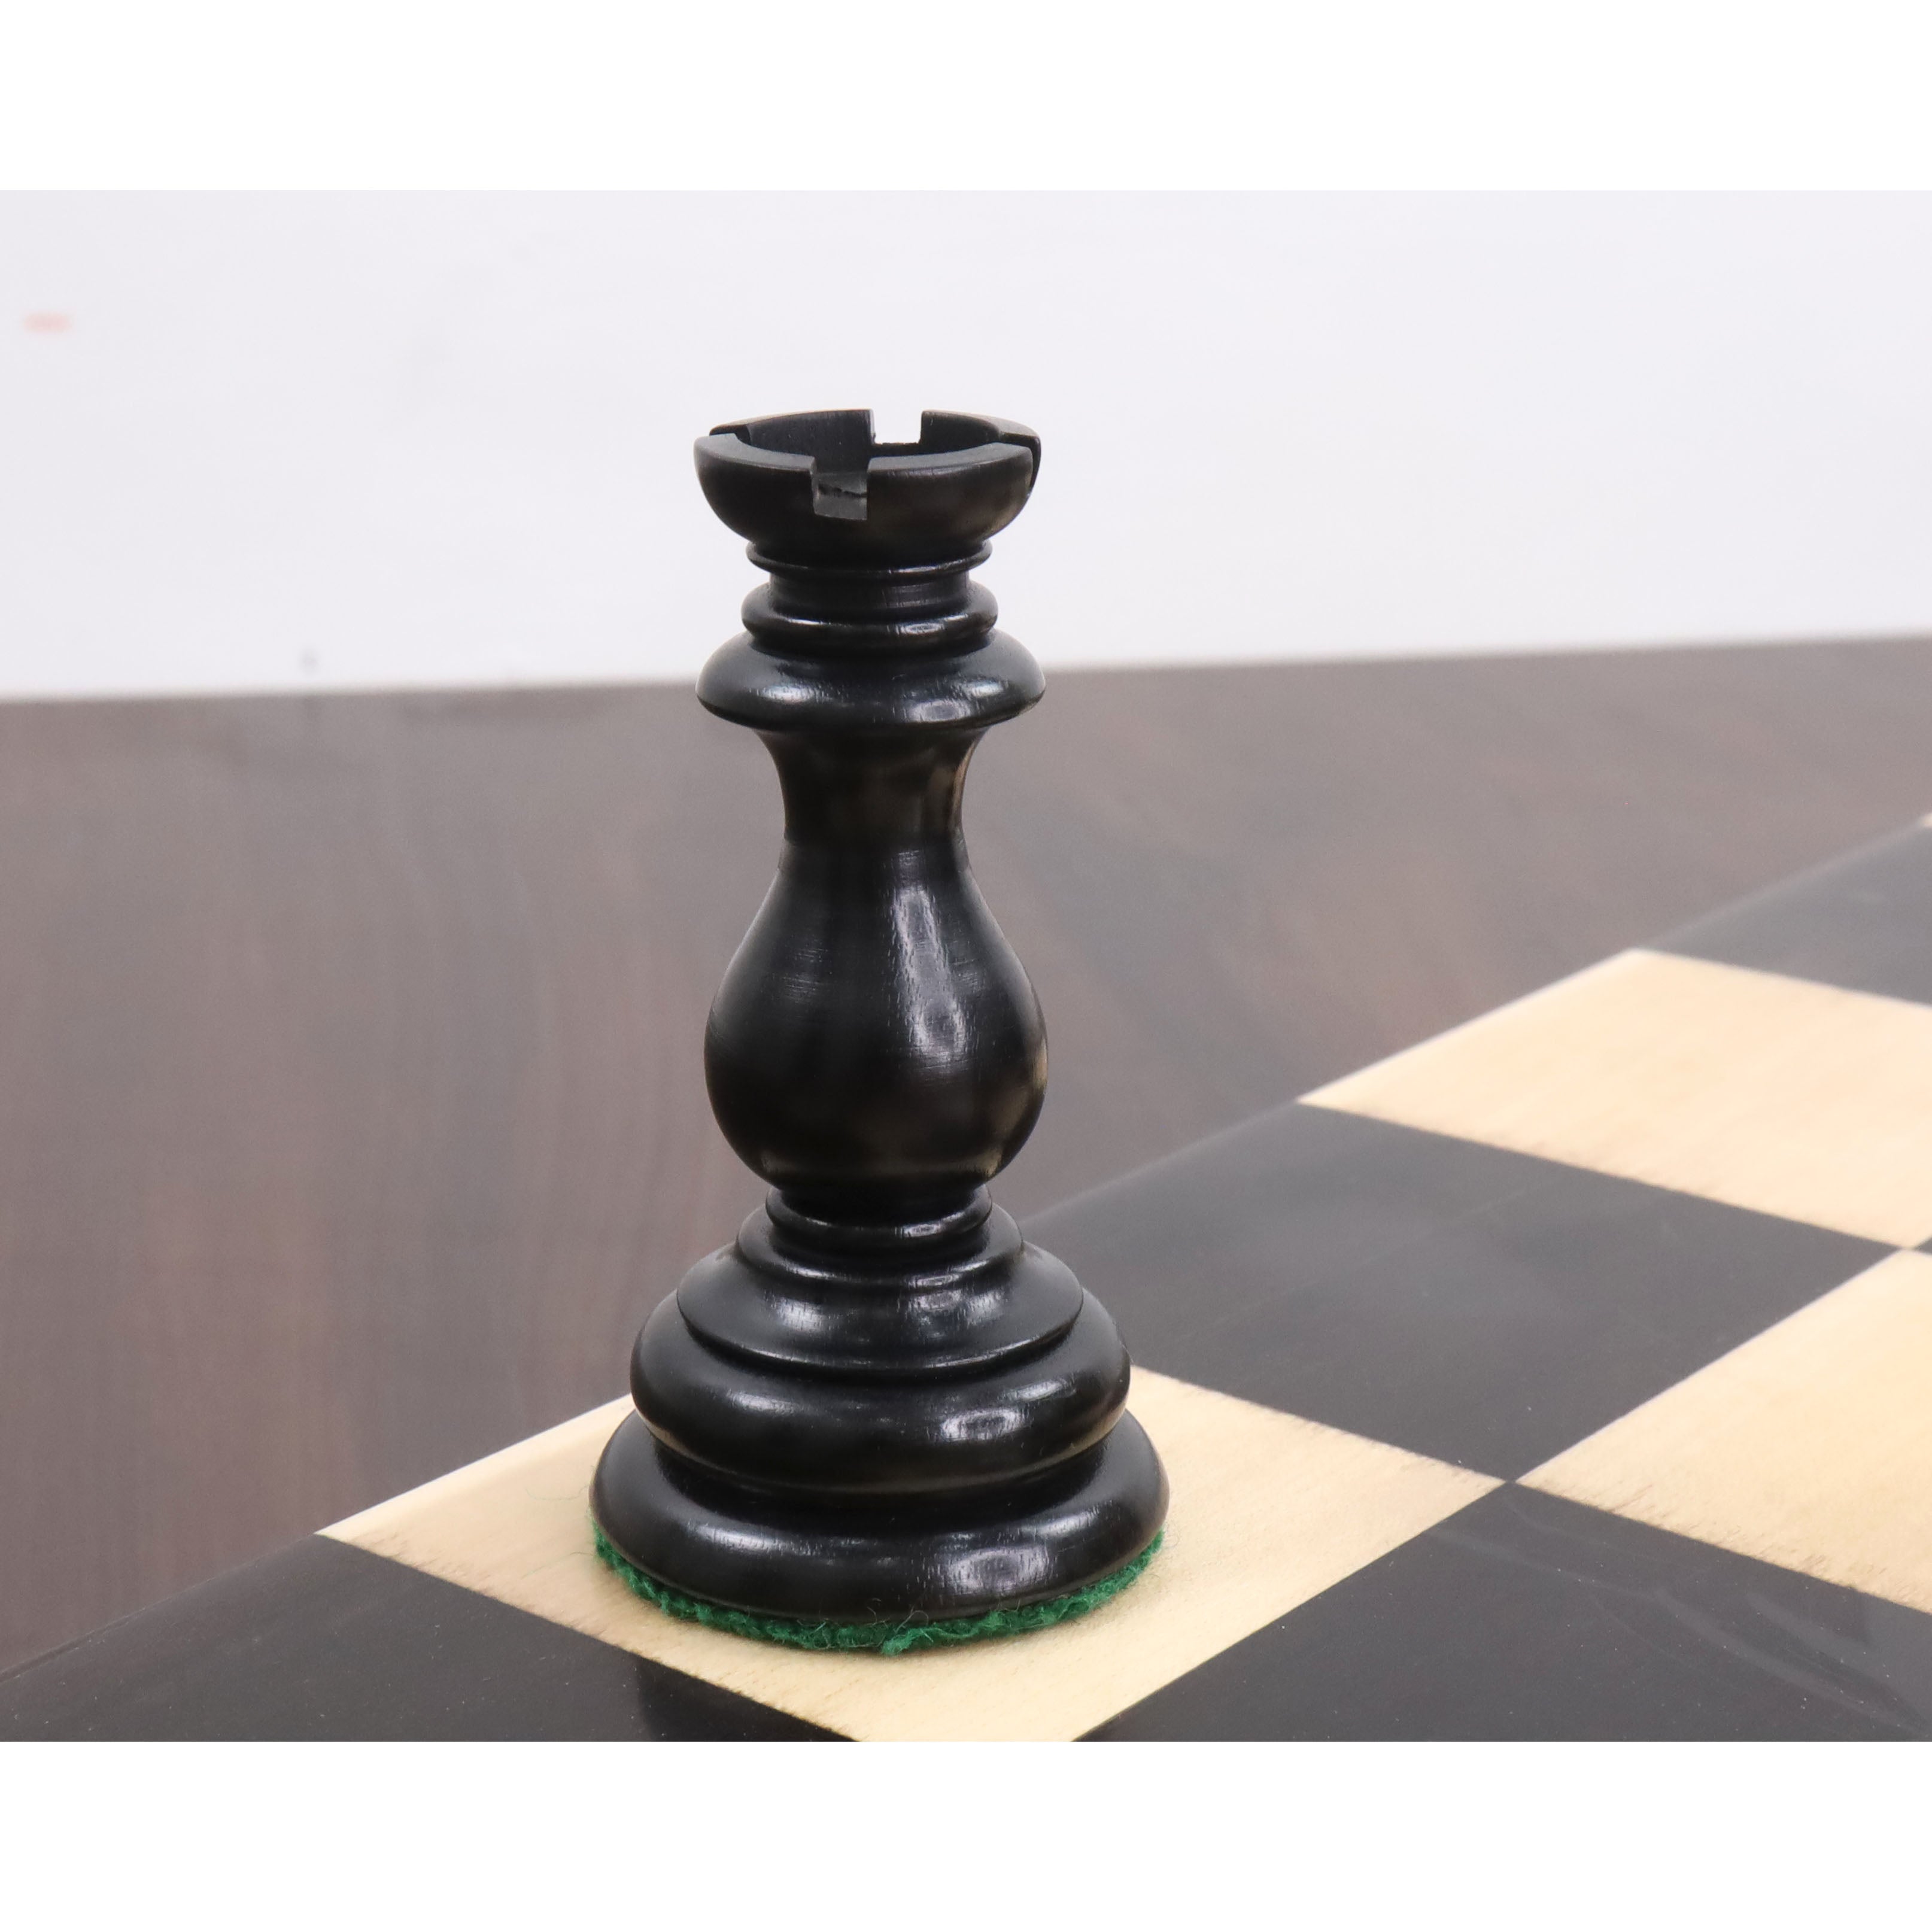 4.6" Medallion Luxury Staunton Chess Set- Chess Pieces Only - Triple Weight Ebony Wood